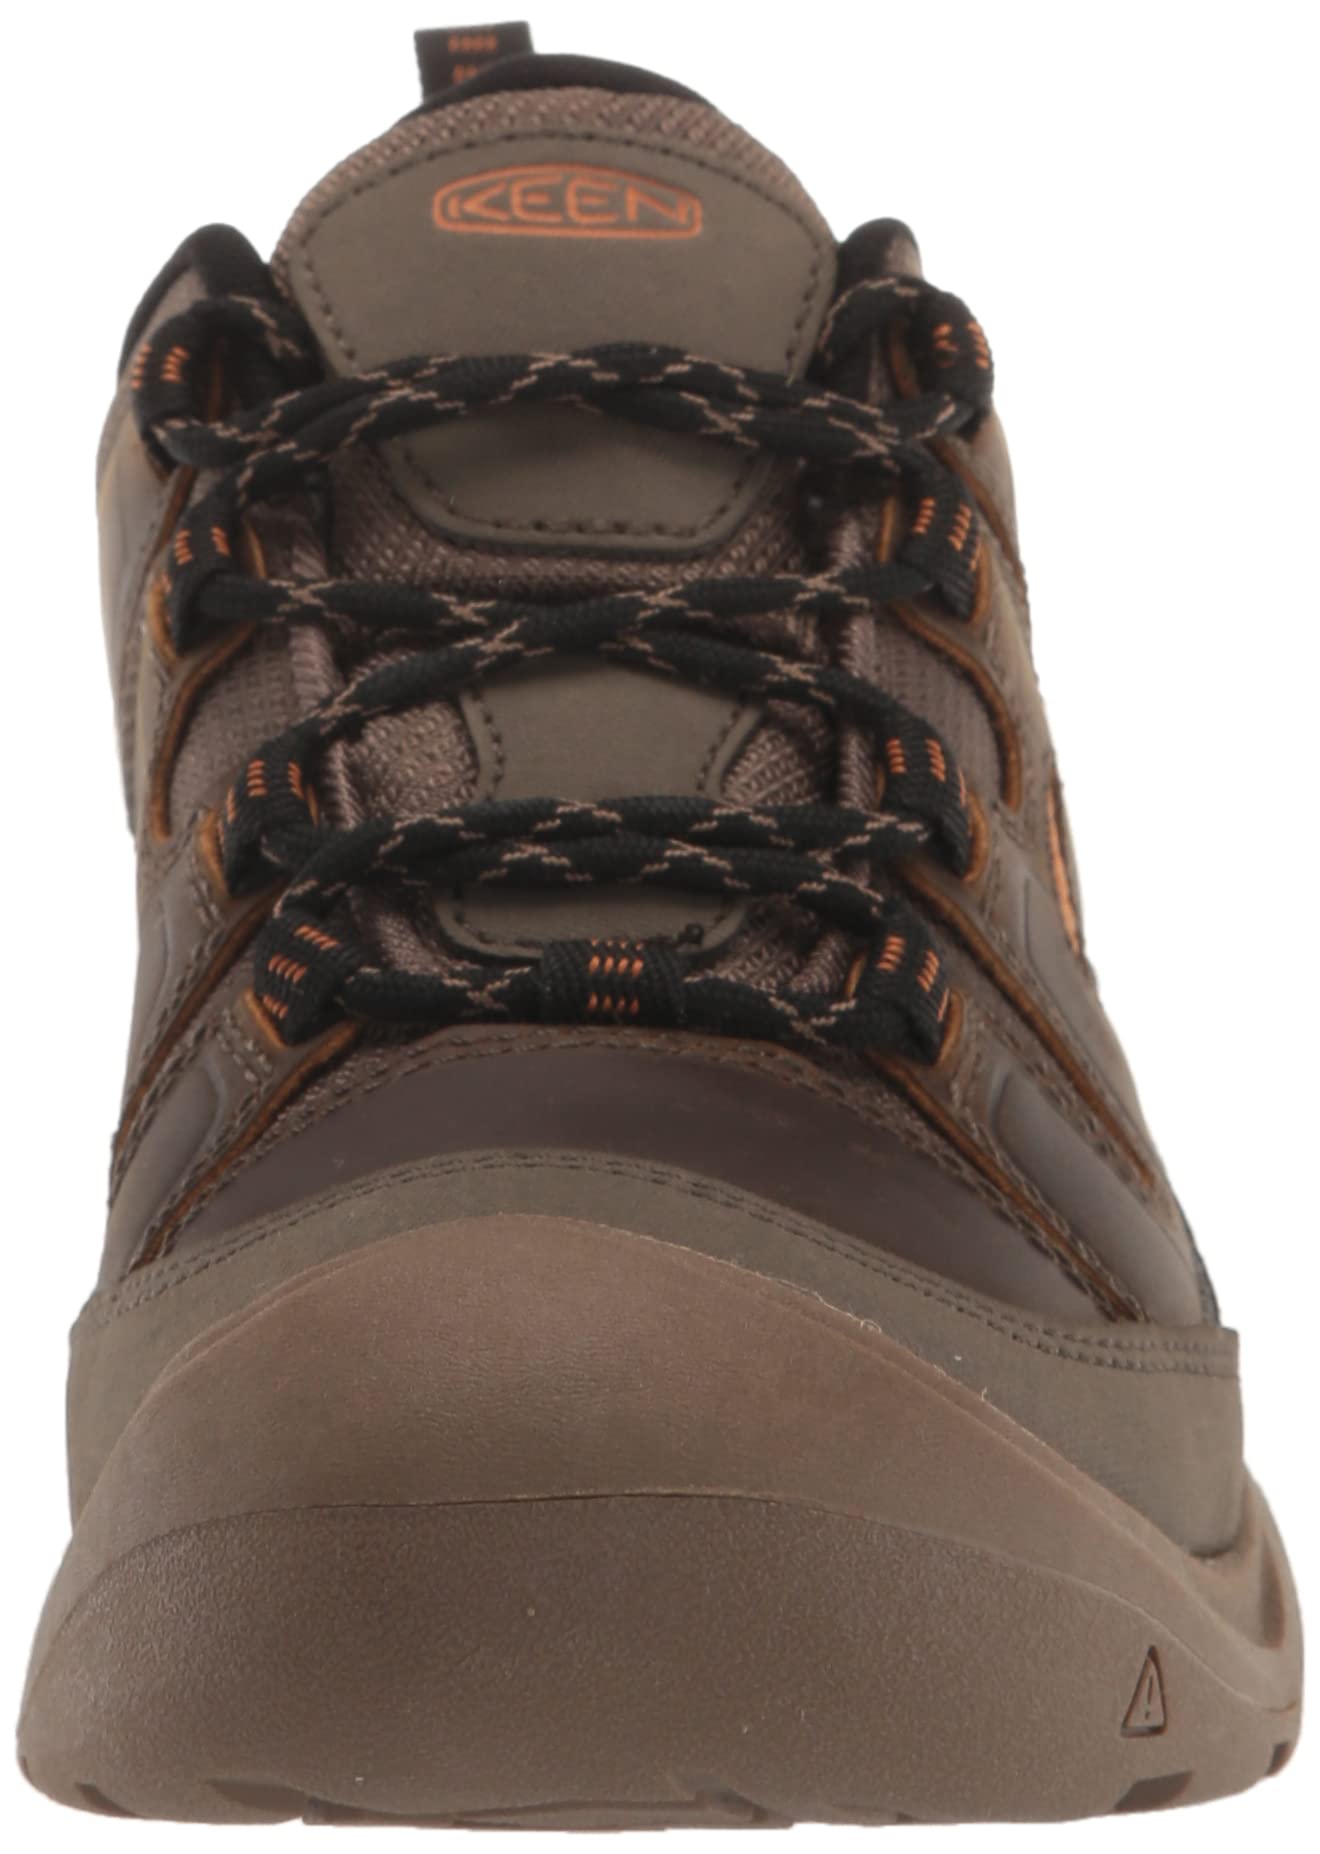 KEEN Men's Circadia Low Height Comfortable Waterproof Hiking Shoes